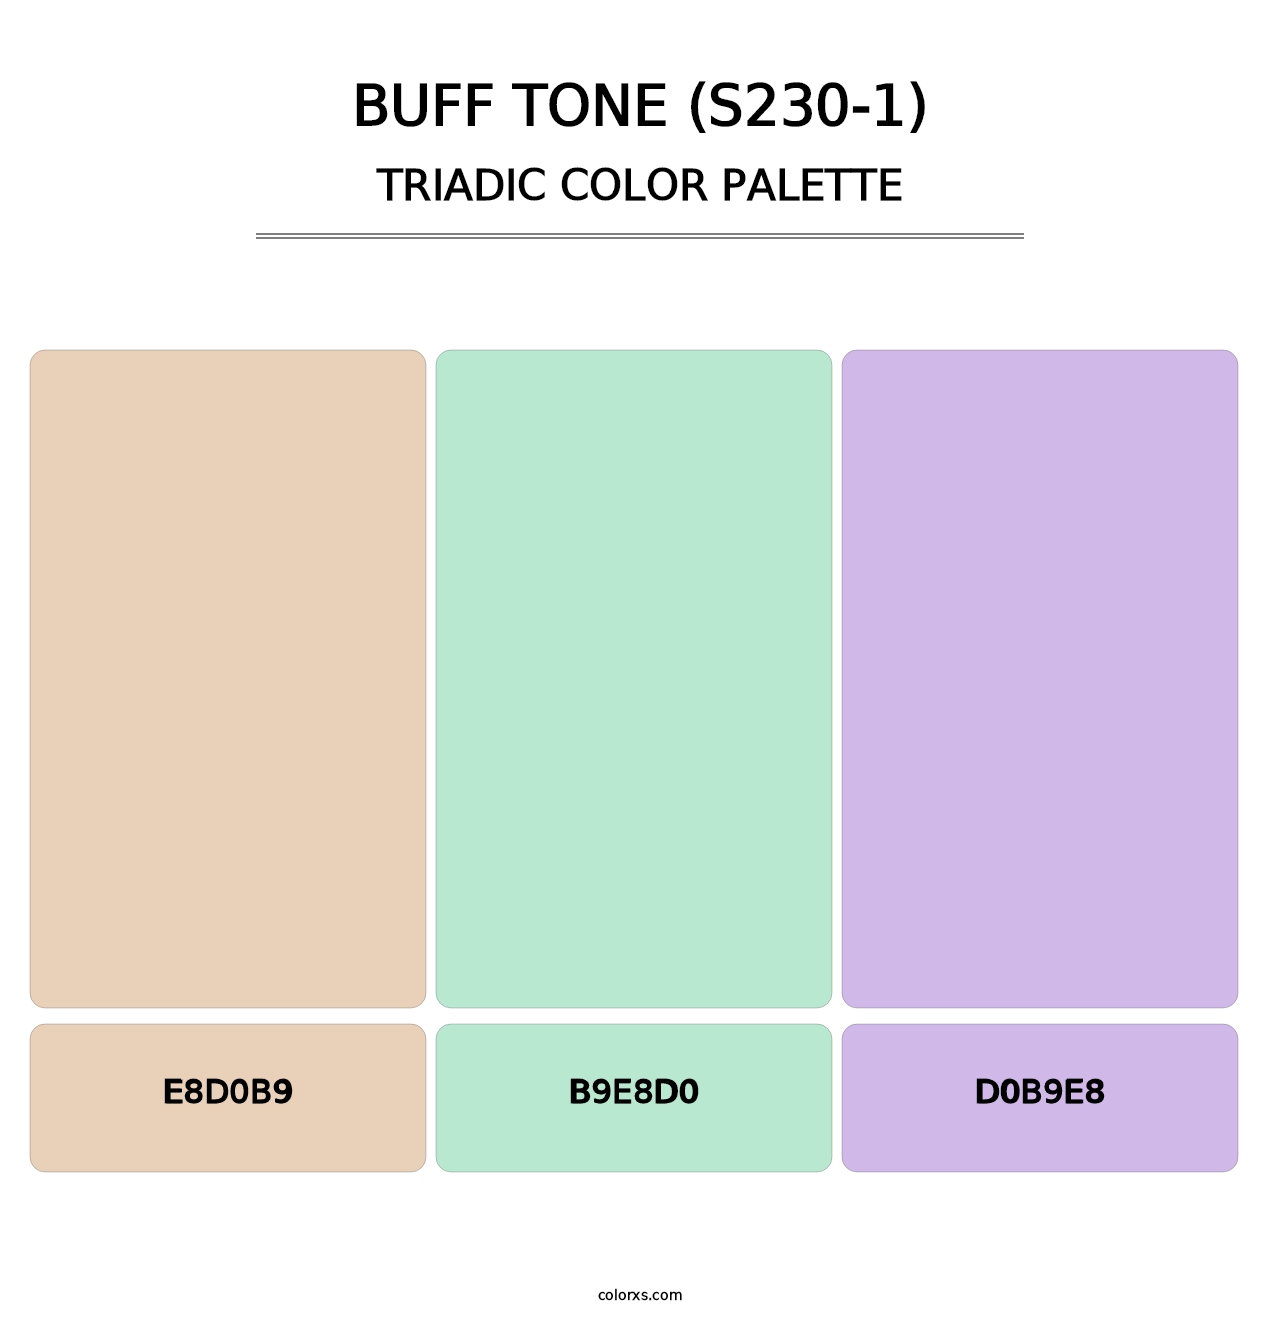 Buff Tone (S230-1) - Triadic Color Palette